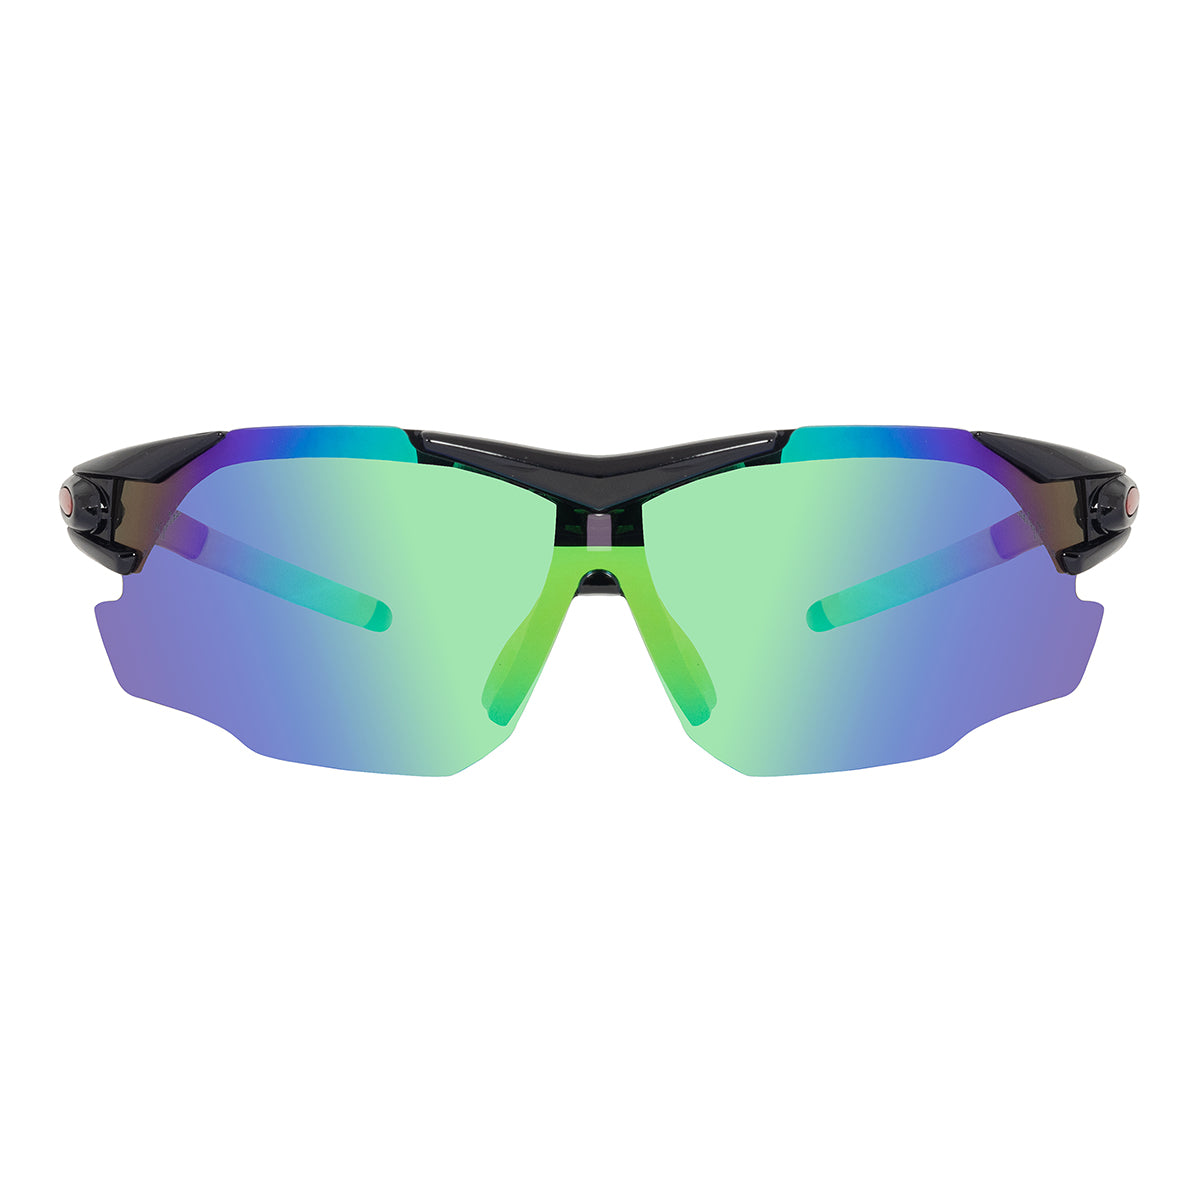 Huracan Active Sunglasses (Polarized Protection)